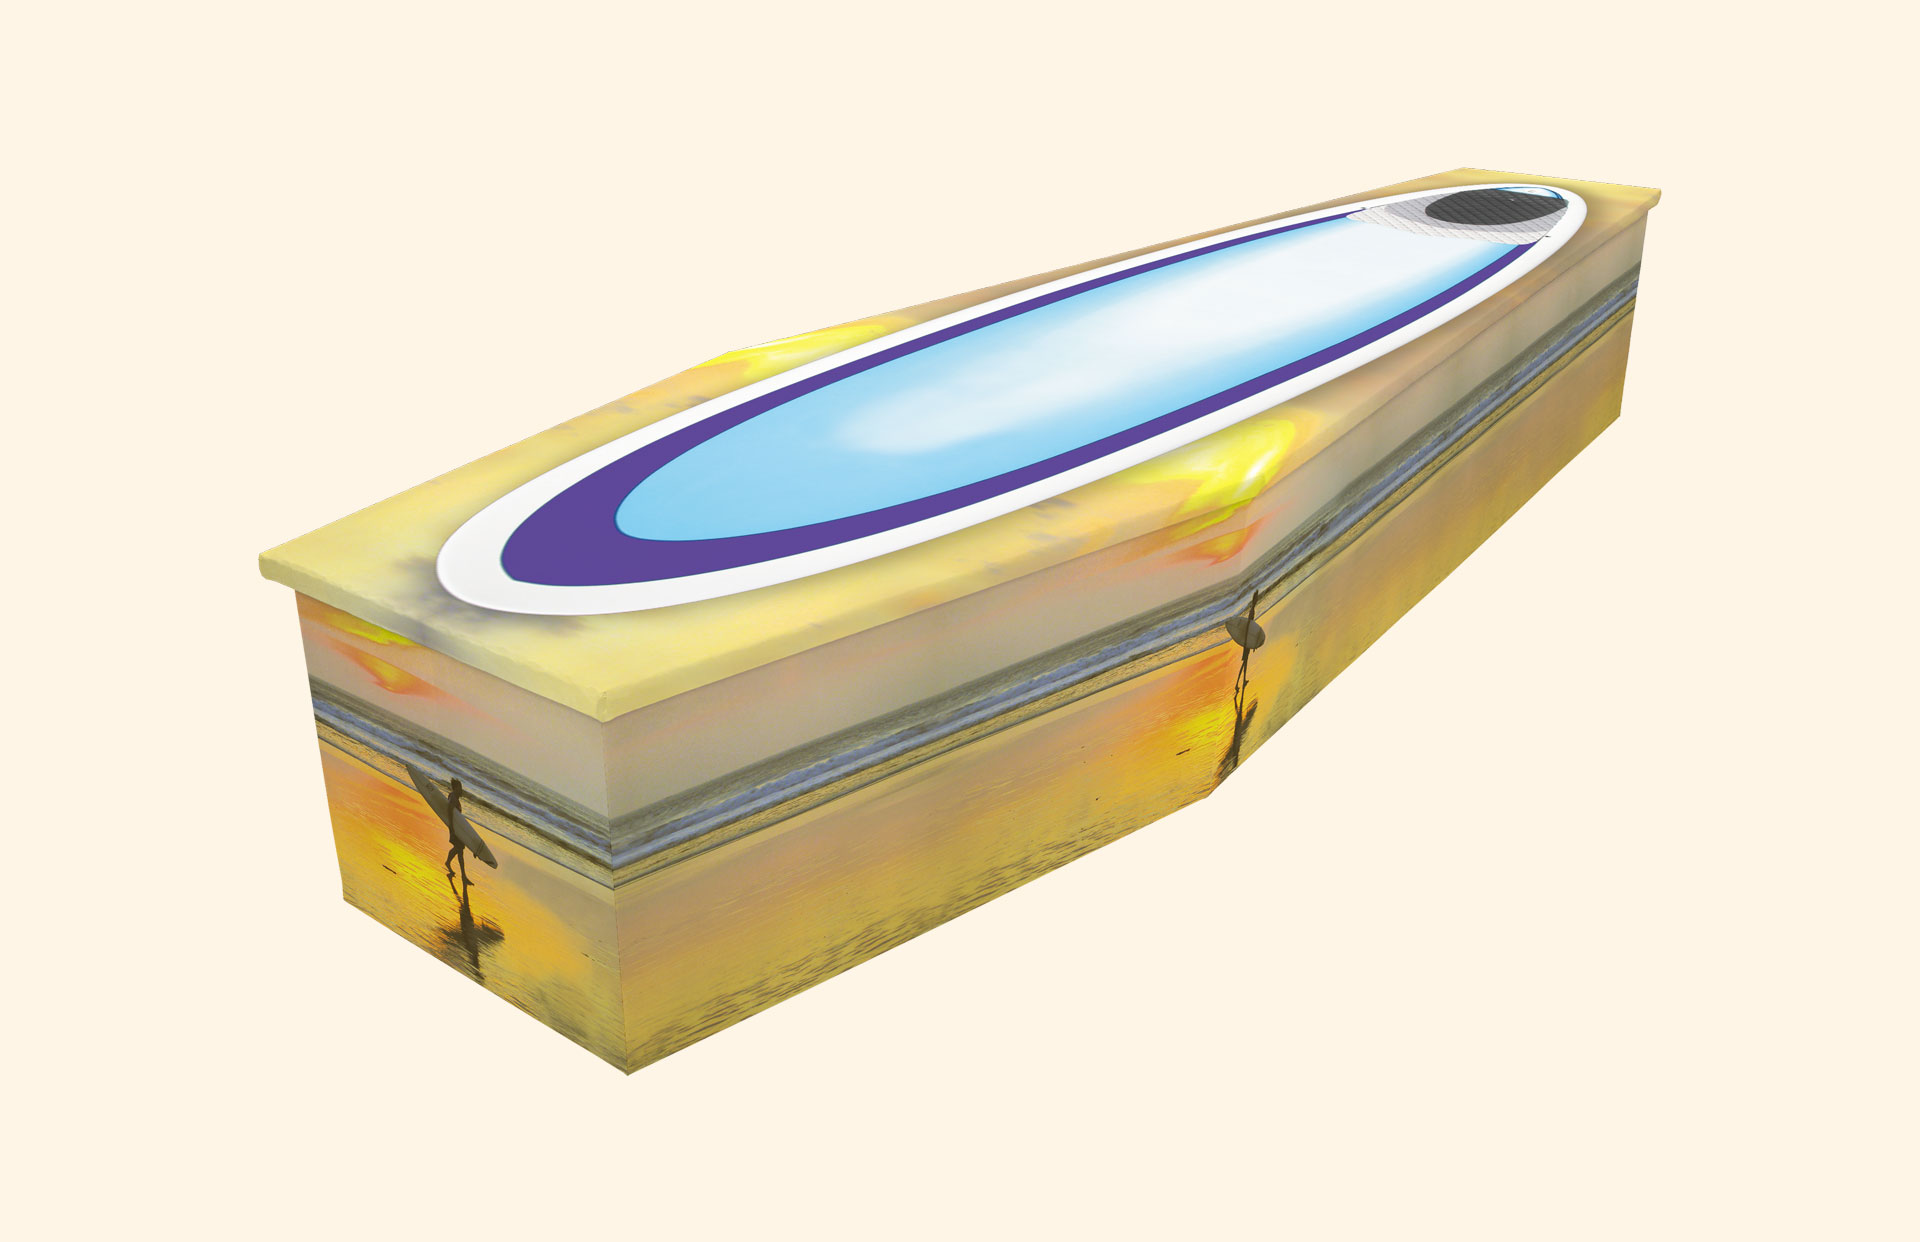 Last Wave design on a cardboard coffin